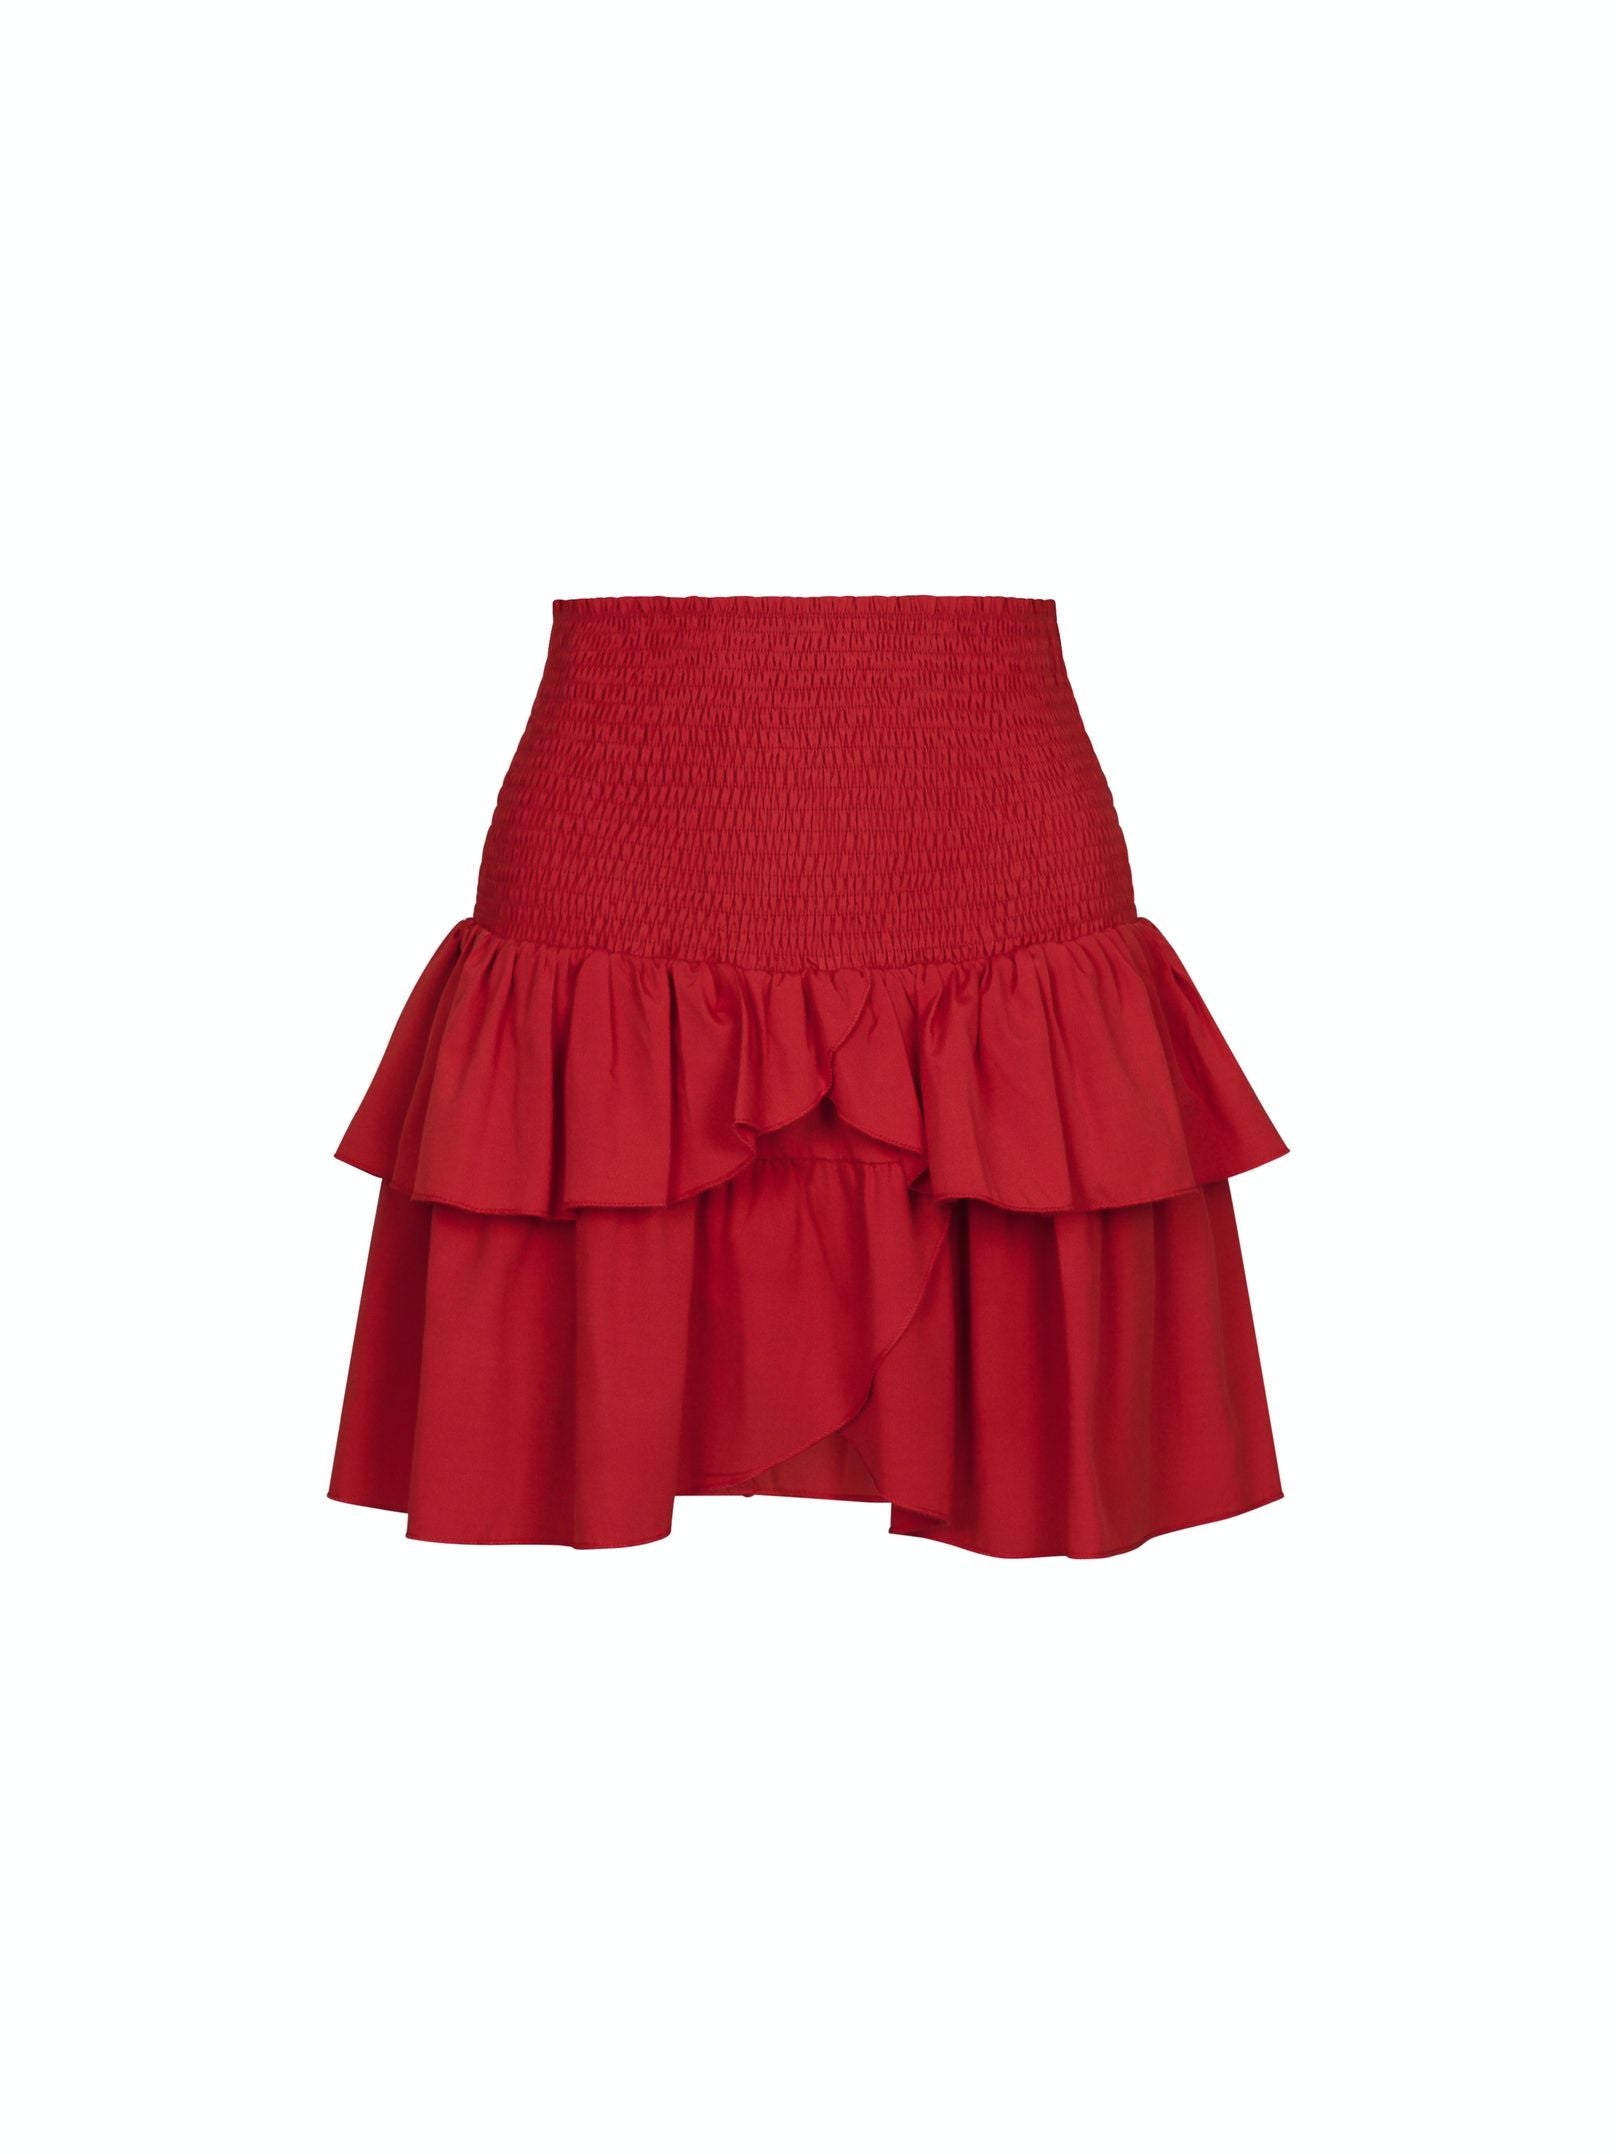 Carin R Skirt Red – VILLOID